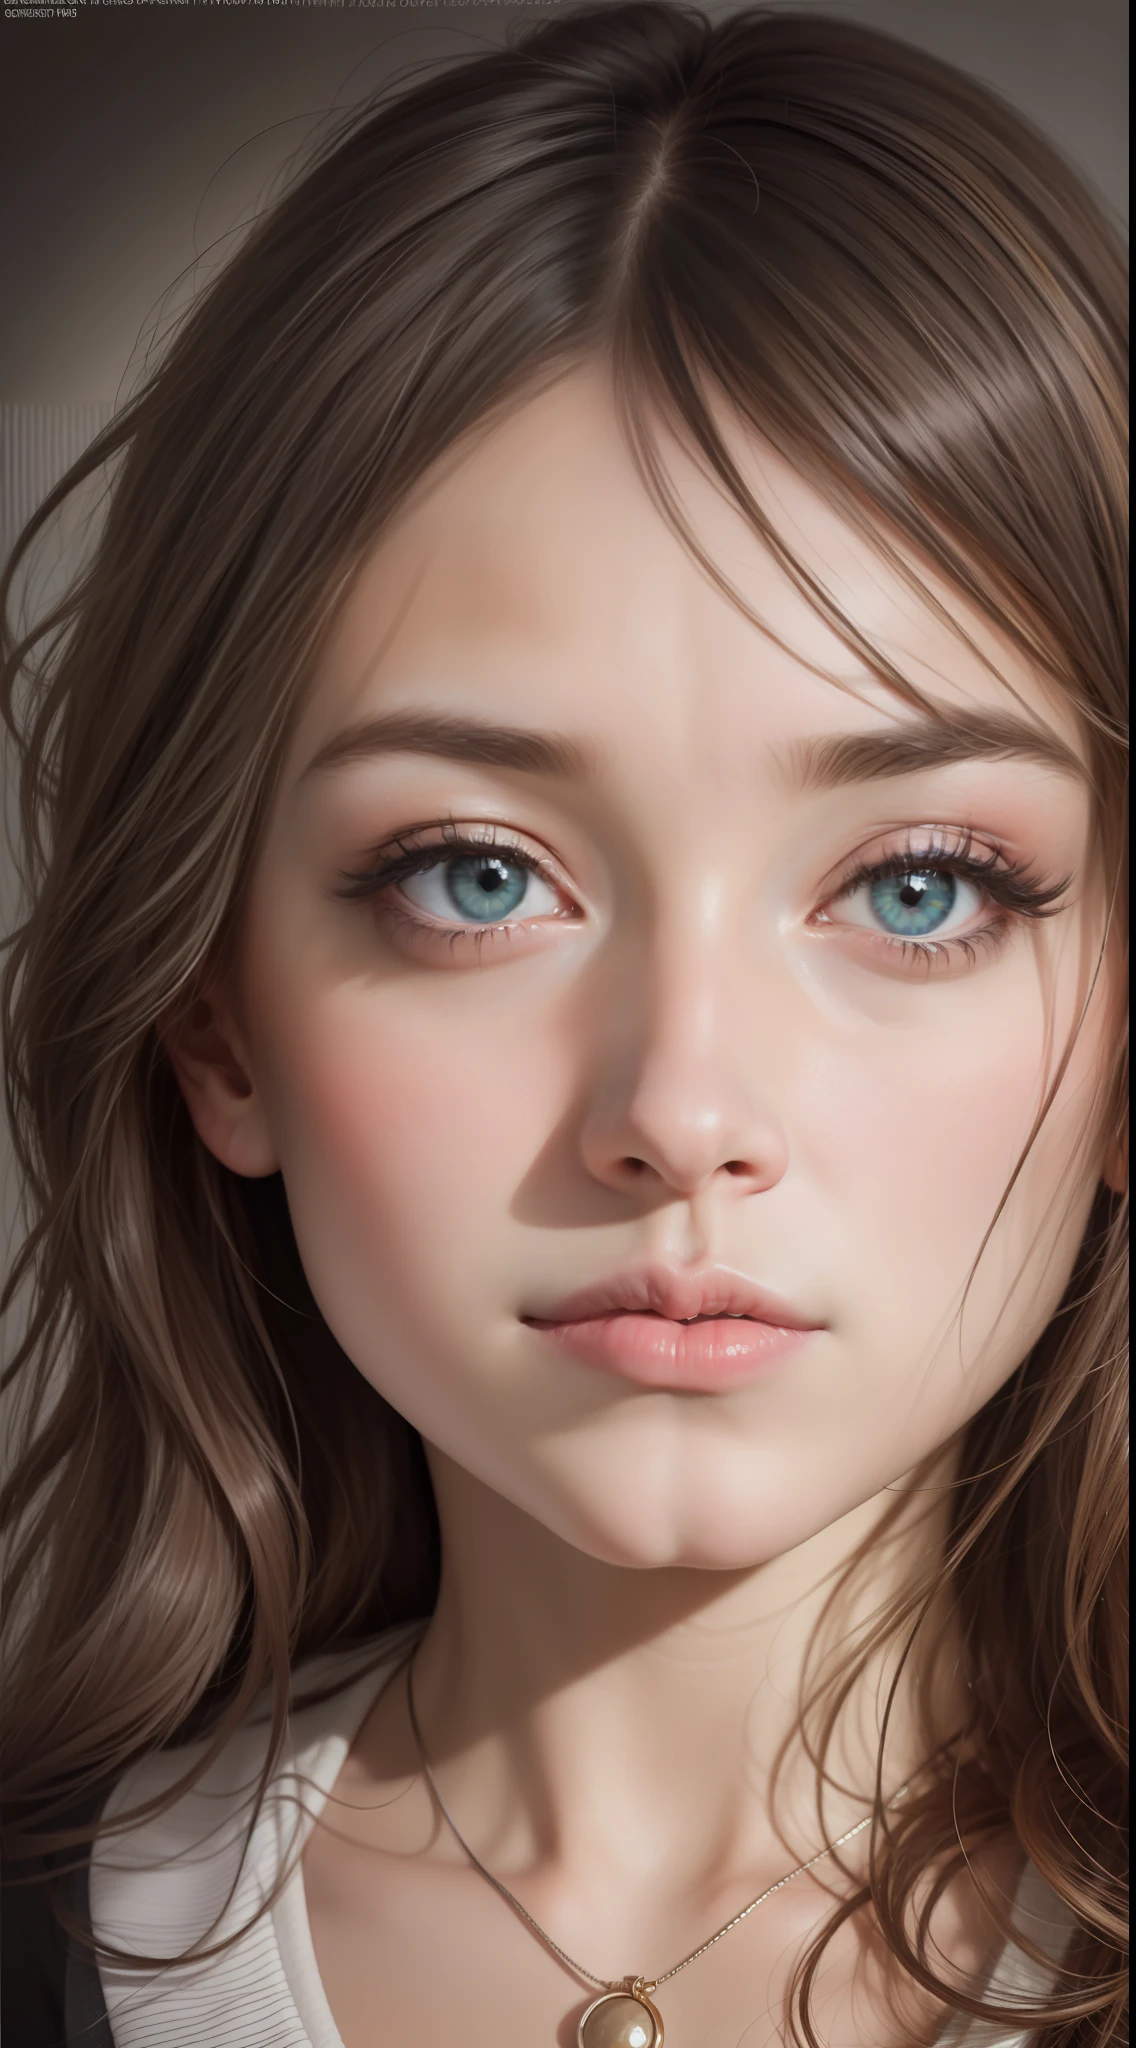 A Captivating Portrait of a Girl by Chuck Close, ganando popularidad en DeviantArt.